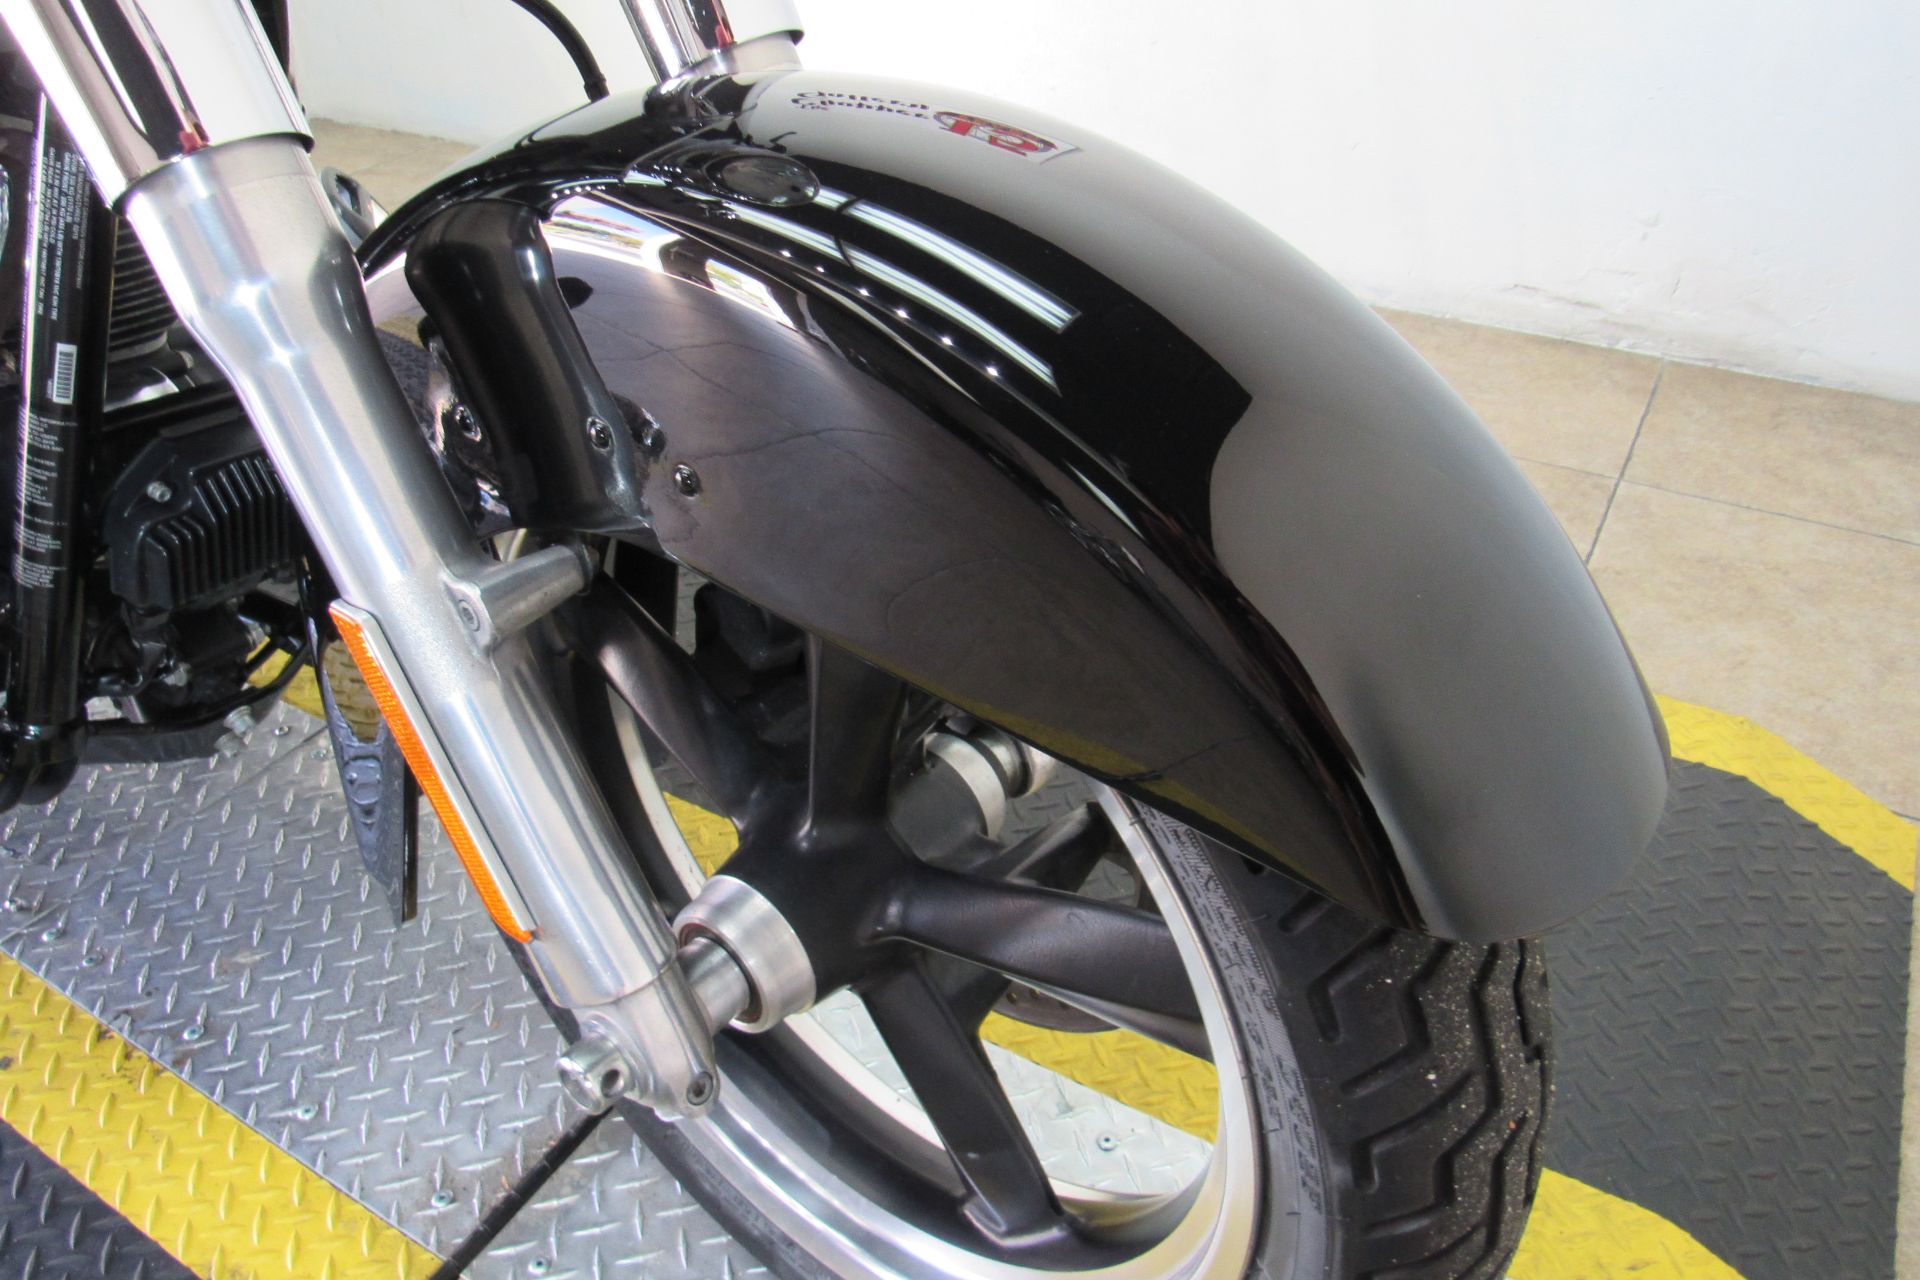 2015 Harley-Davidson Switchback™ in Temecula, California - Photo 17